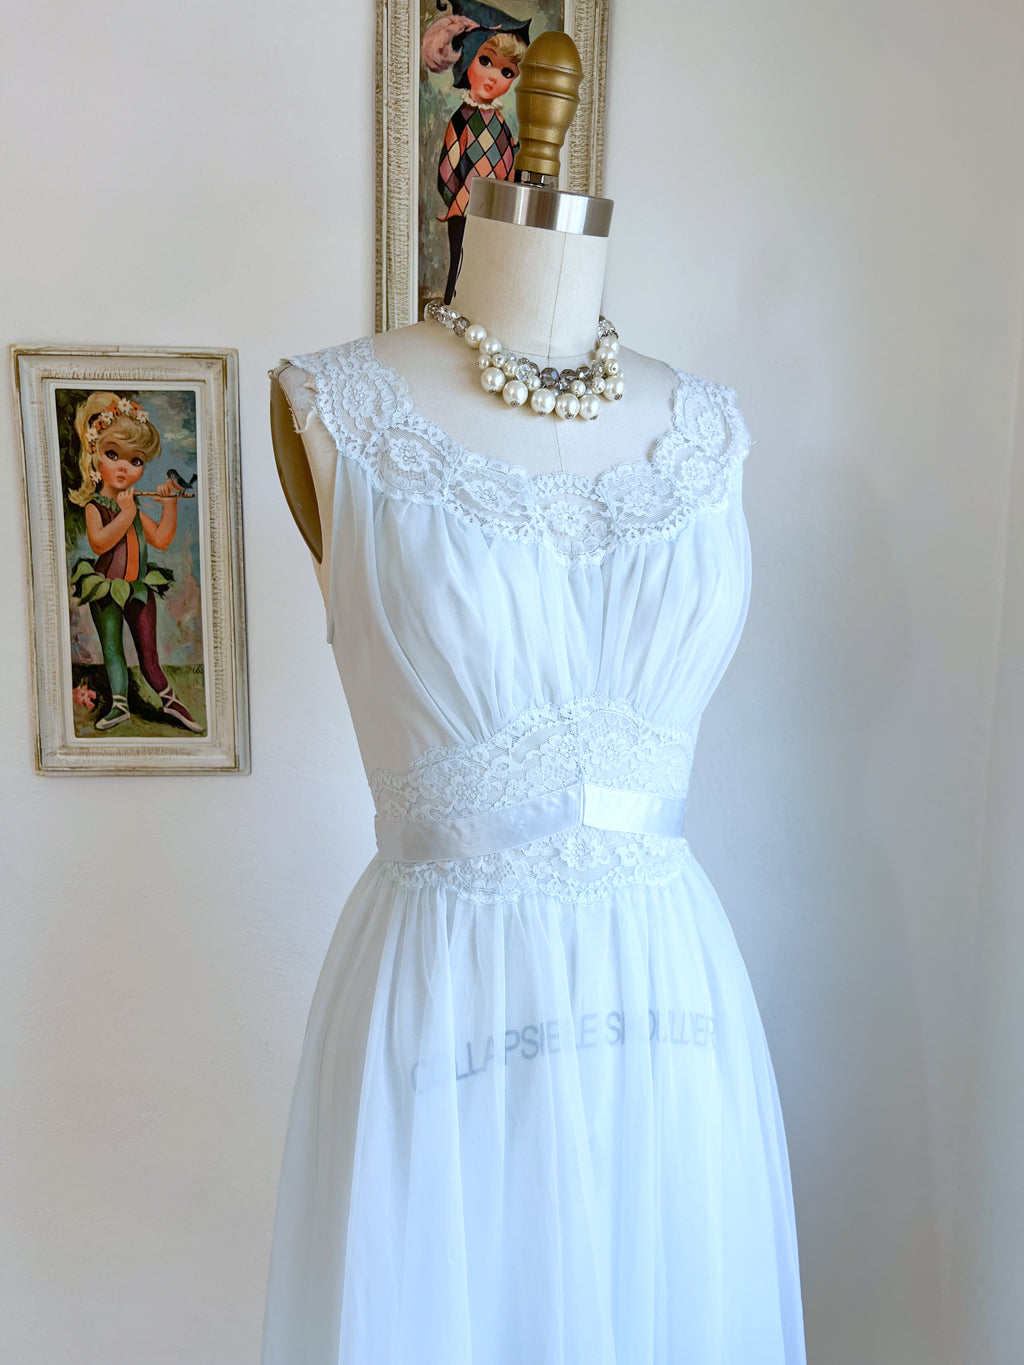 Vintage 1950s Waltz Nightgown - Vanity Fair Pale Blue Double Chiffon Beauty Size